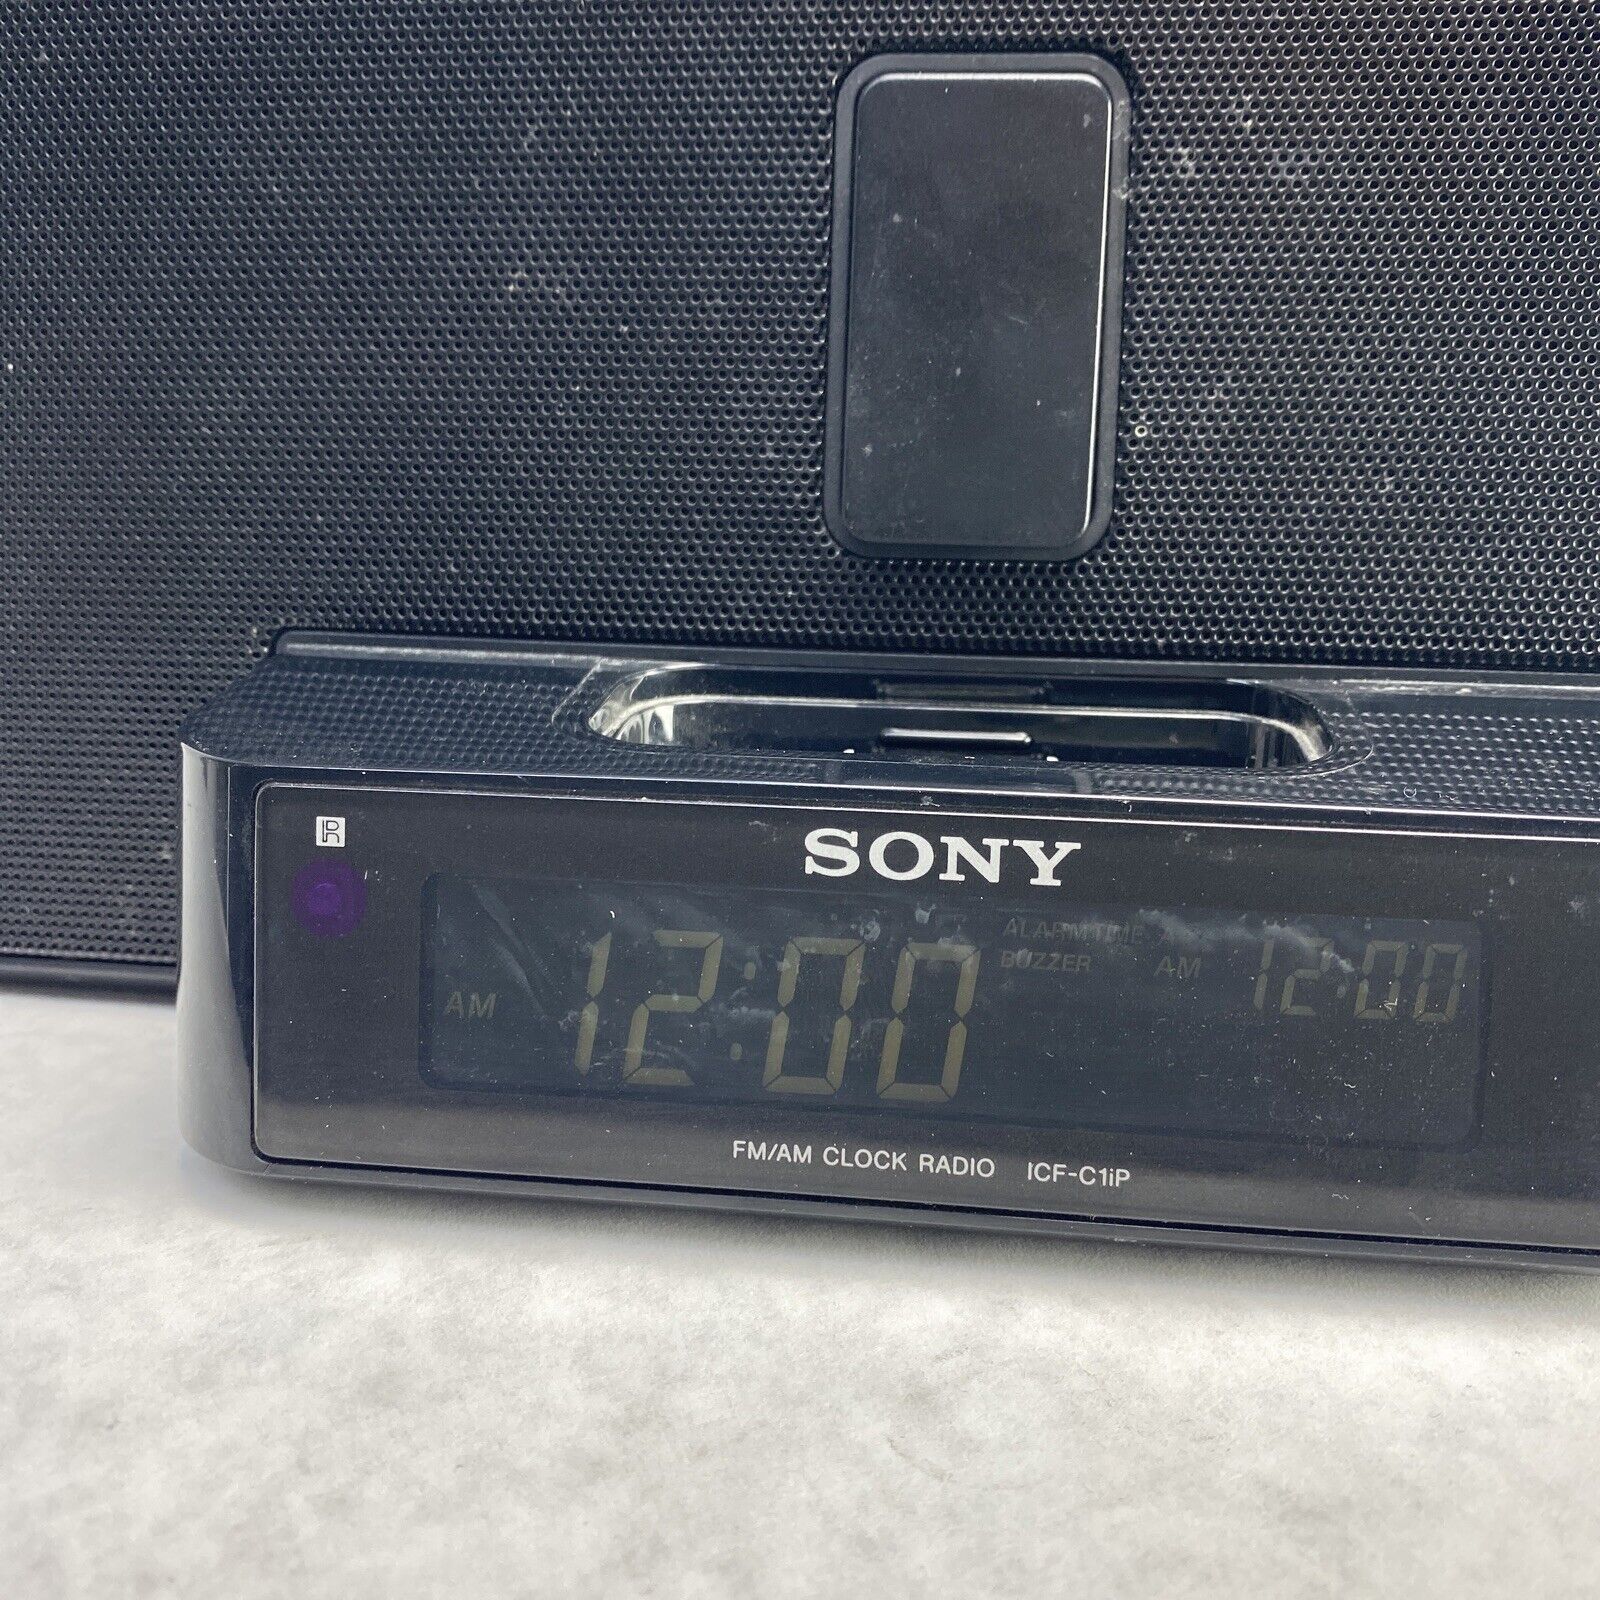 Sony ICF-C1iP Dream Machine AM/FM iPod MP3 Player Clock Radio Black w/ Remote